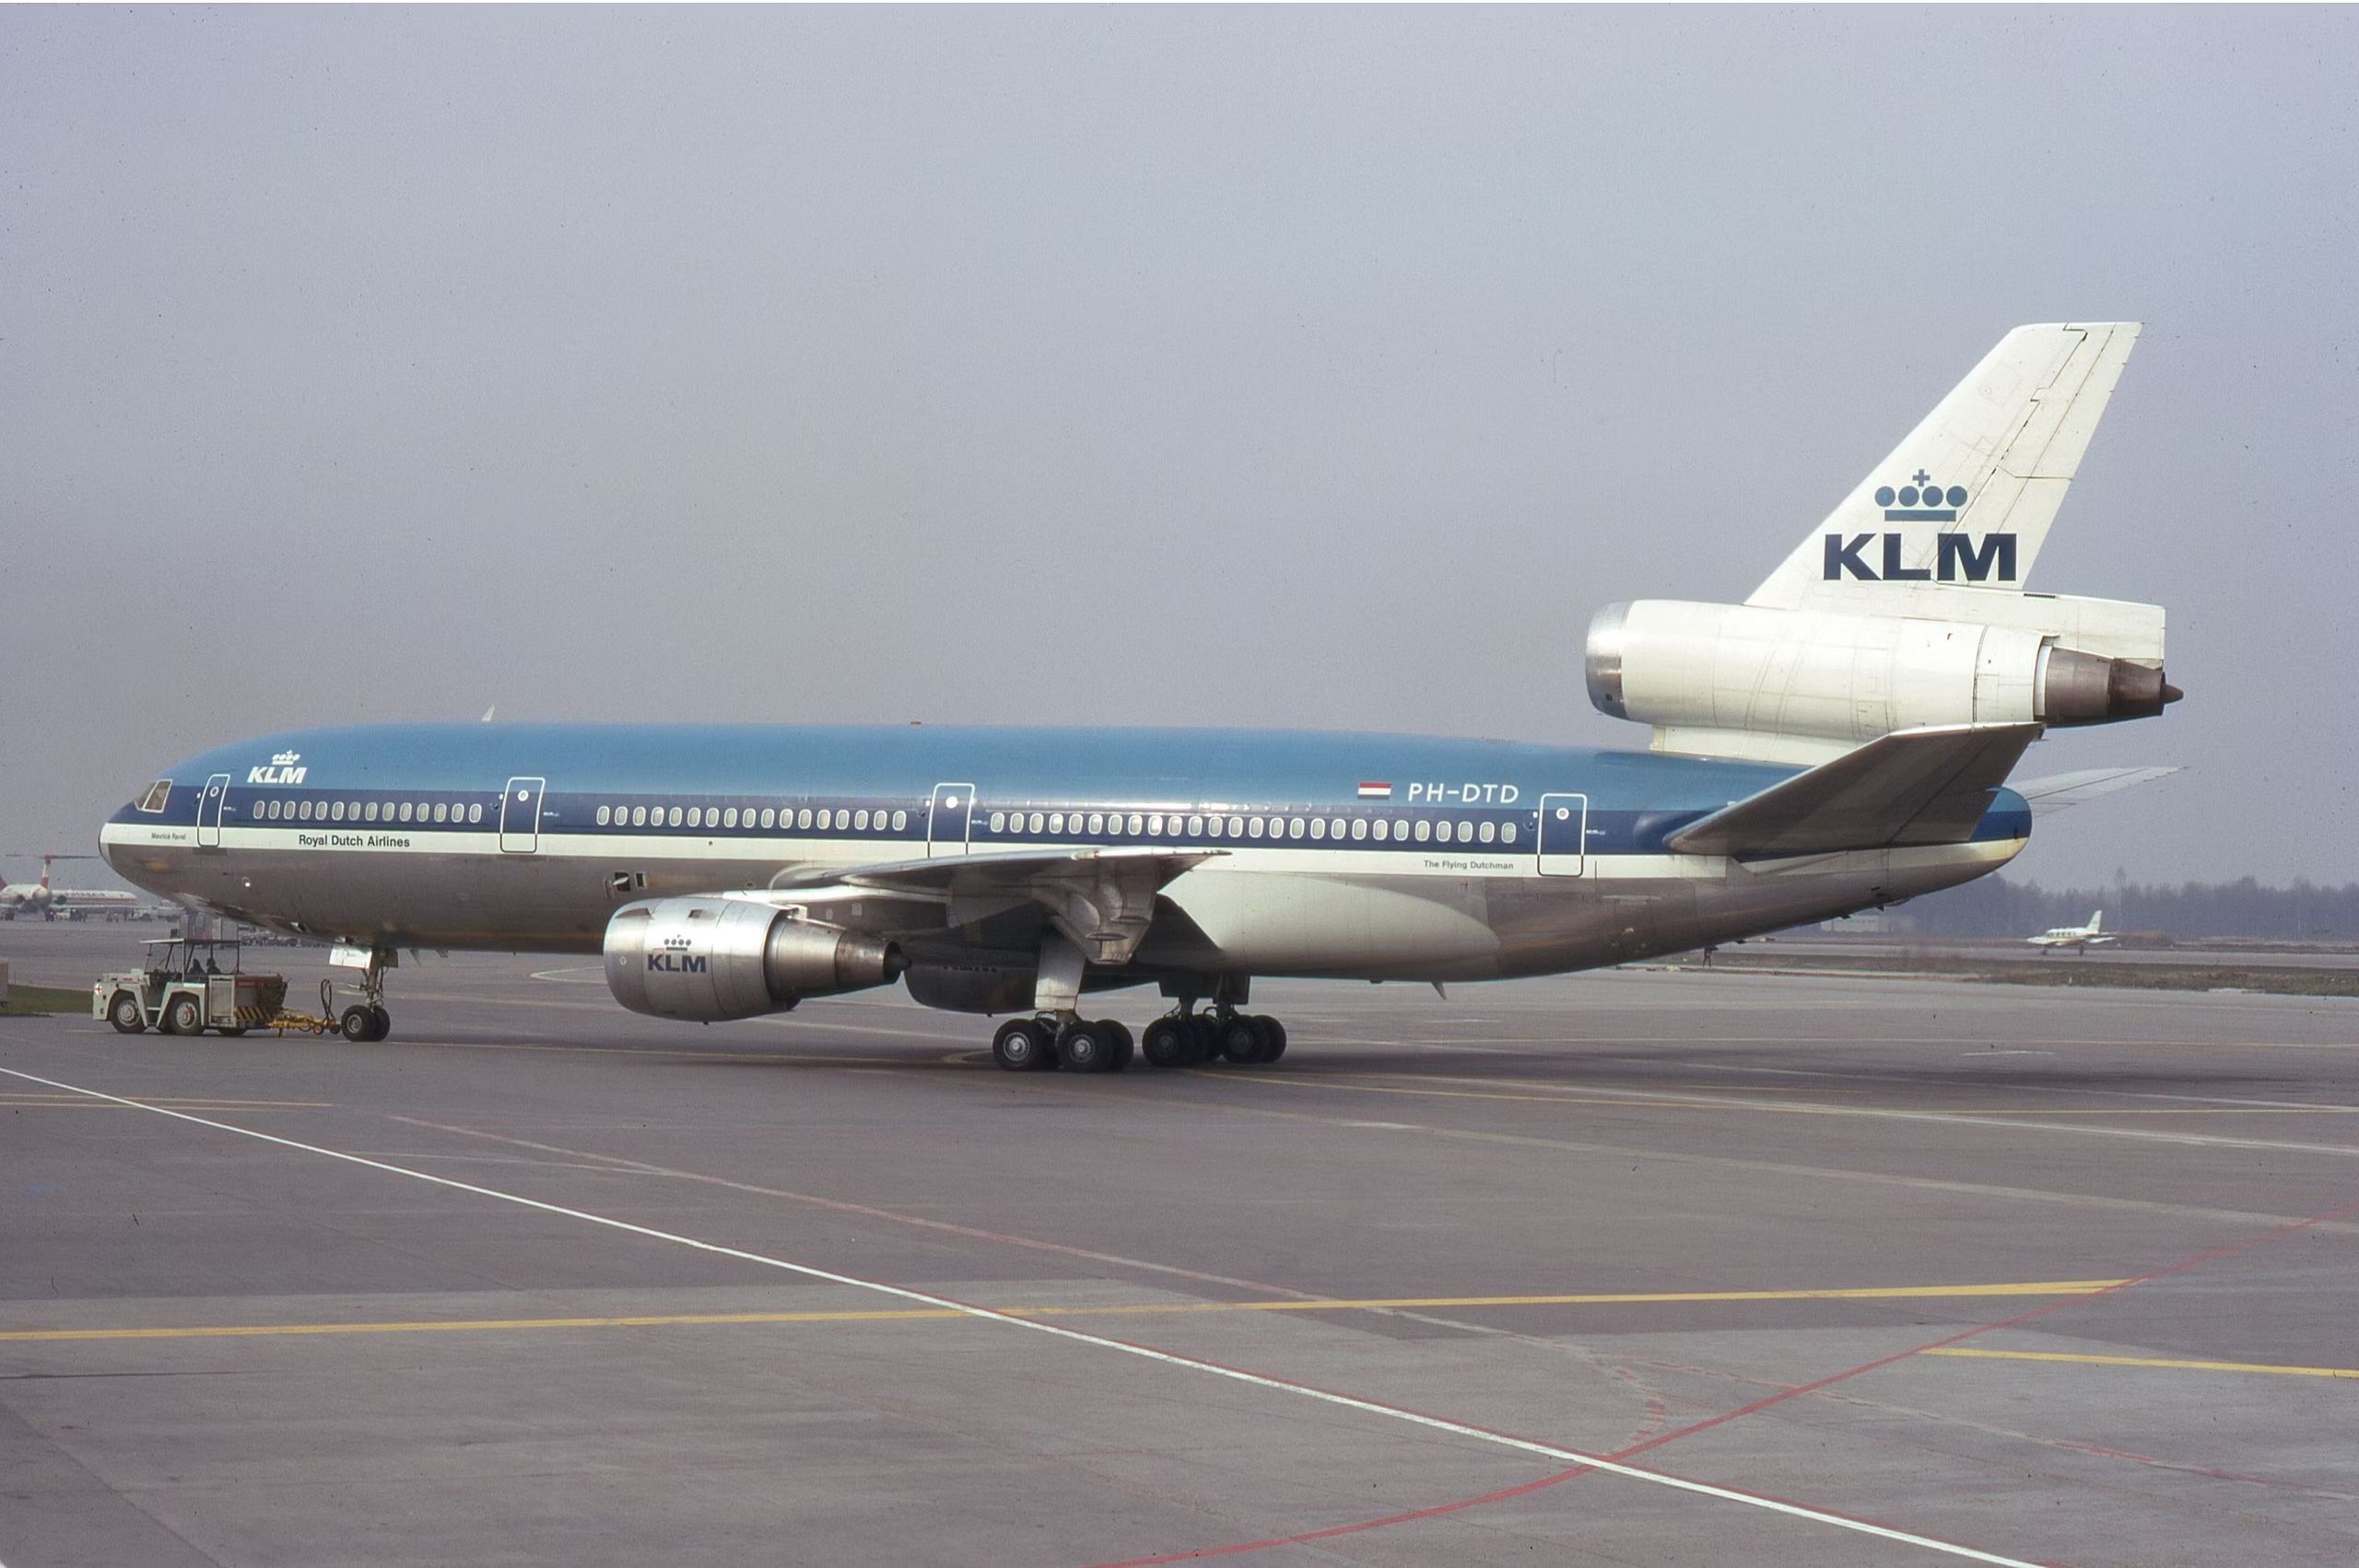 A KLM McDonnell Douglas DC-10 on an airport apron.